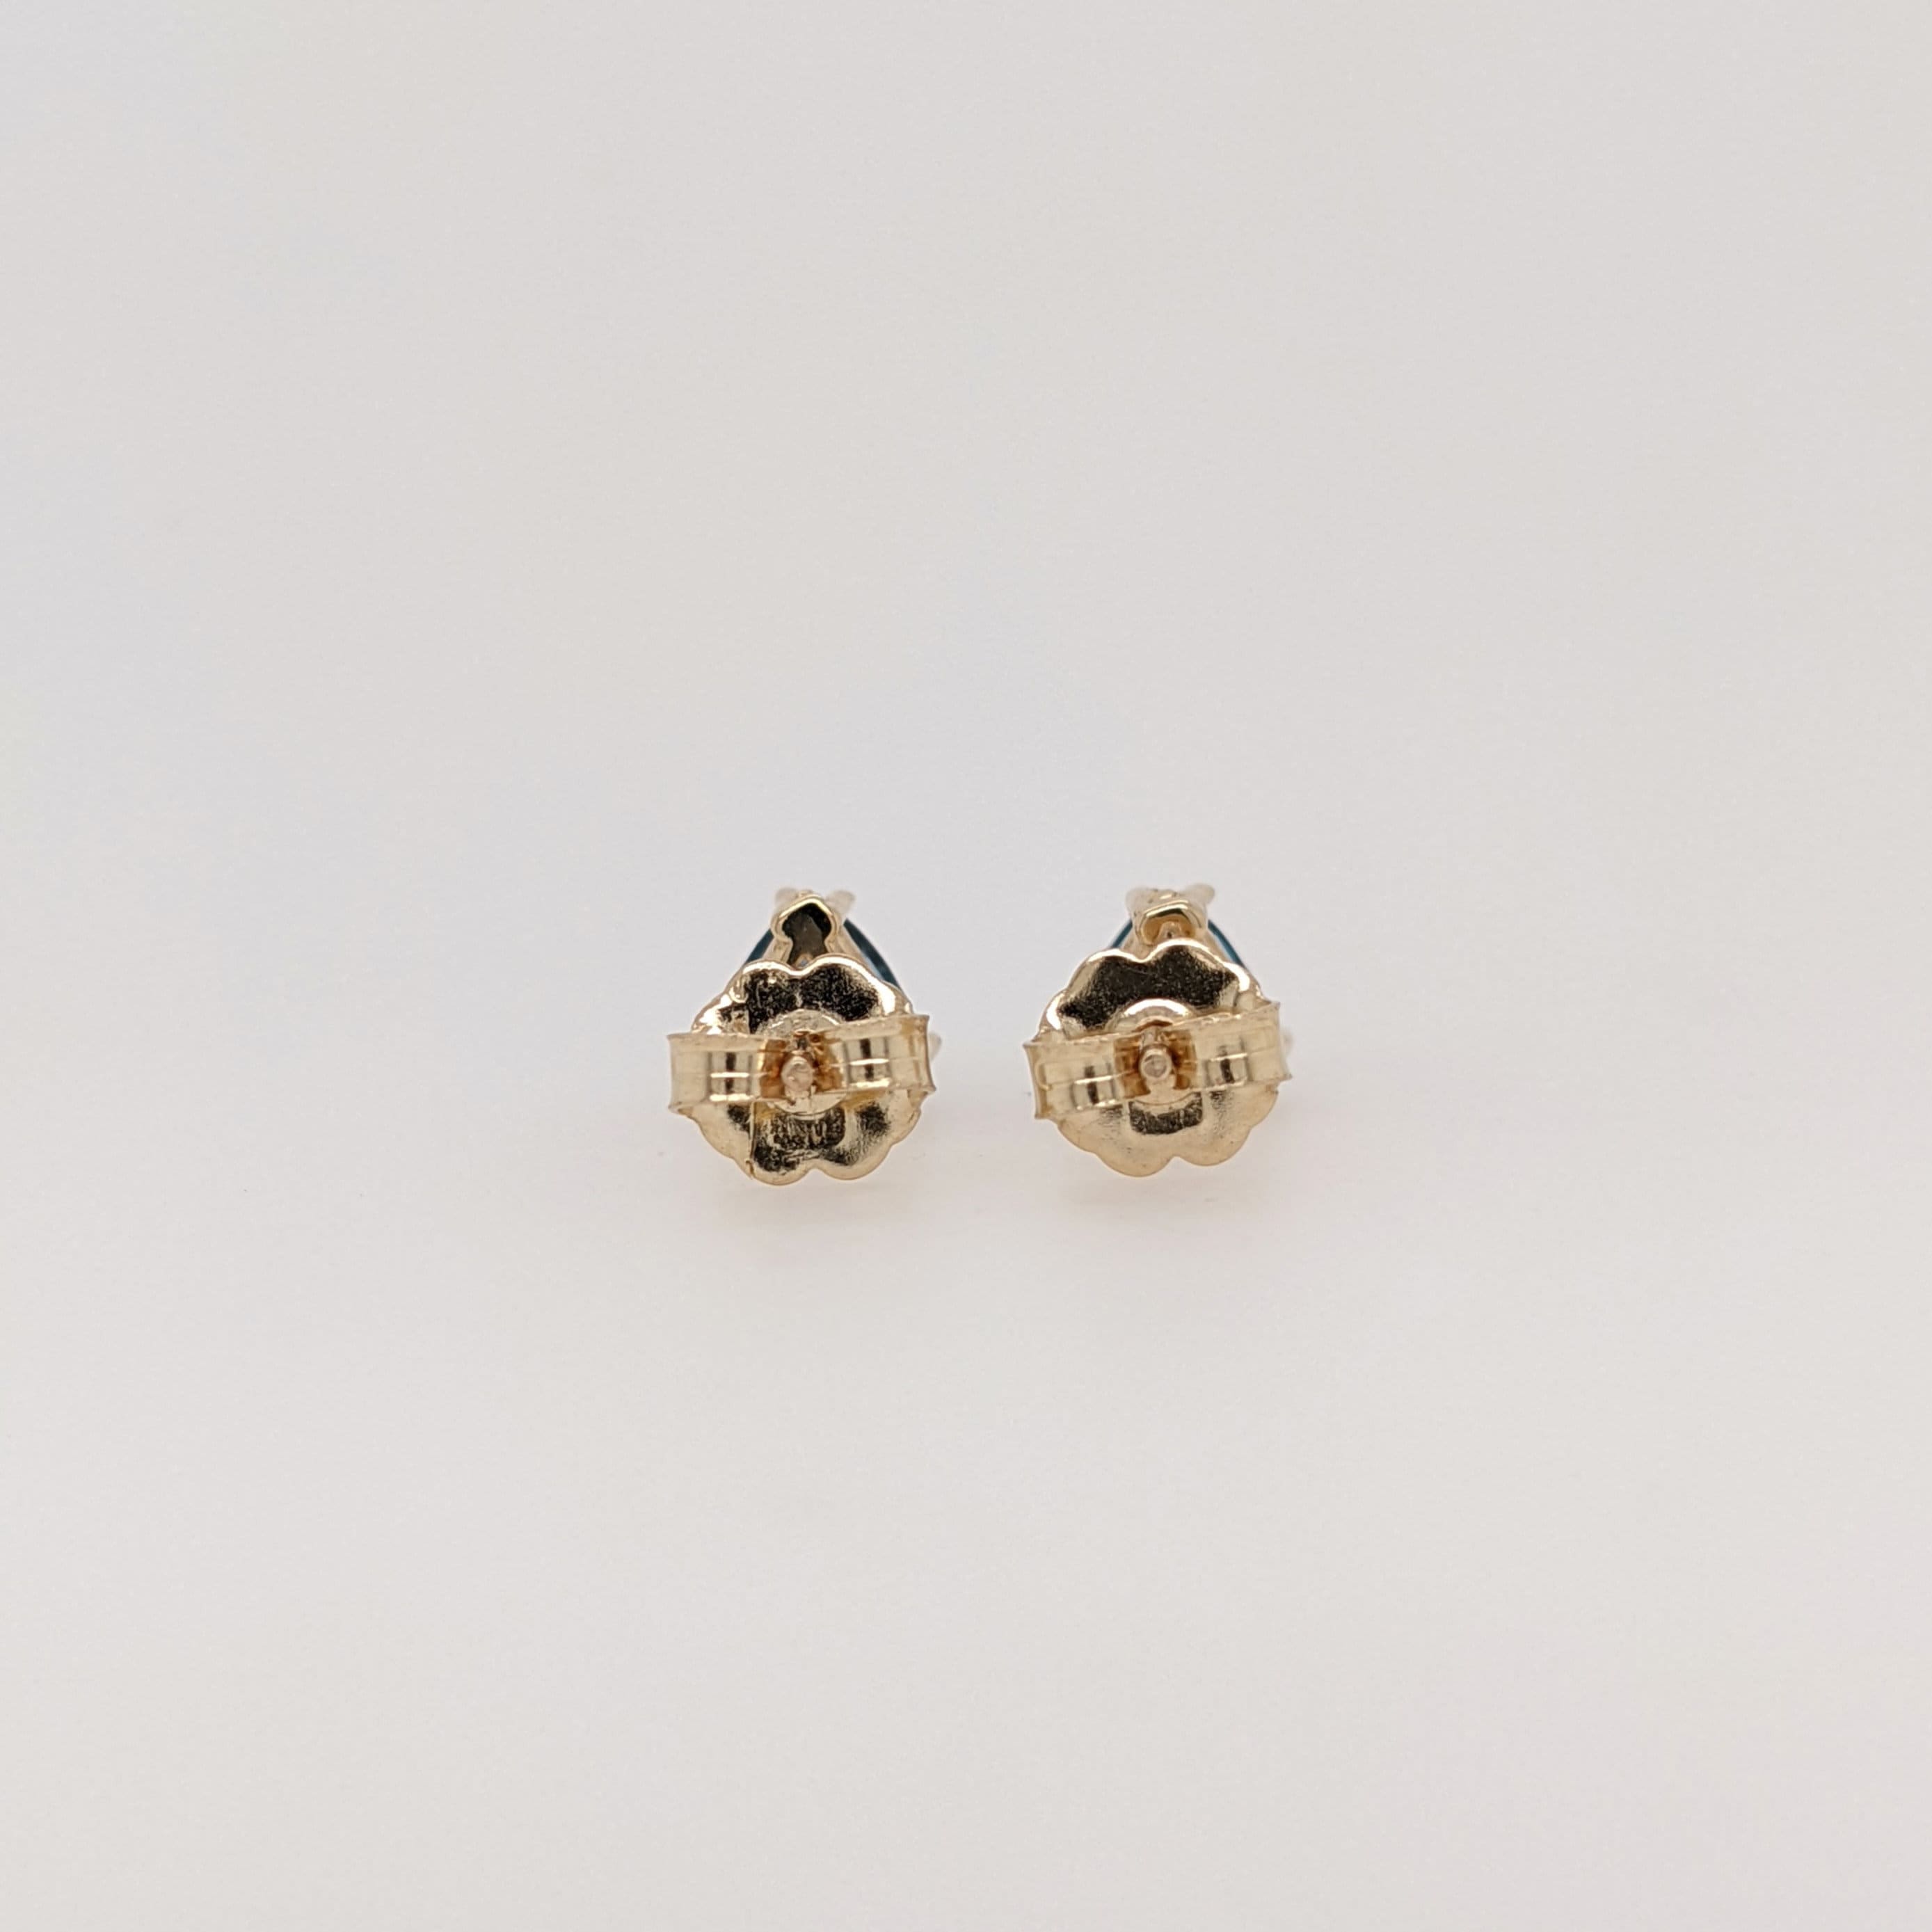 London Blue Topaz Studs in 14k Solid White, Yellow or Rose Gold | Trillion 5mm Solitaire Earrings | December Birthstone | Gemstone Earrings